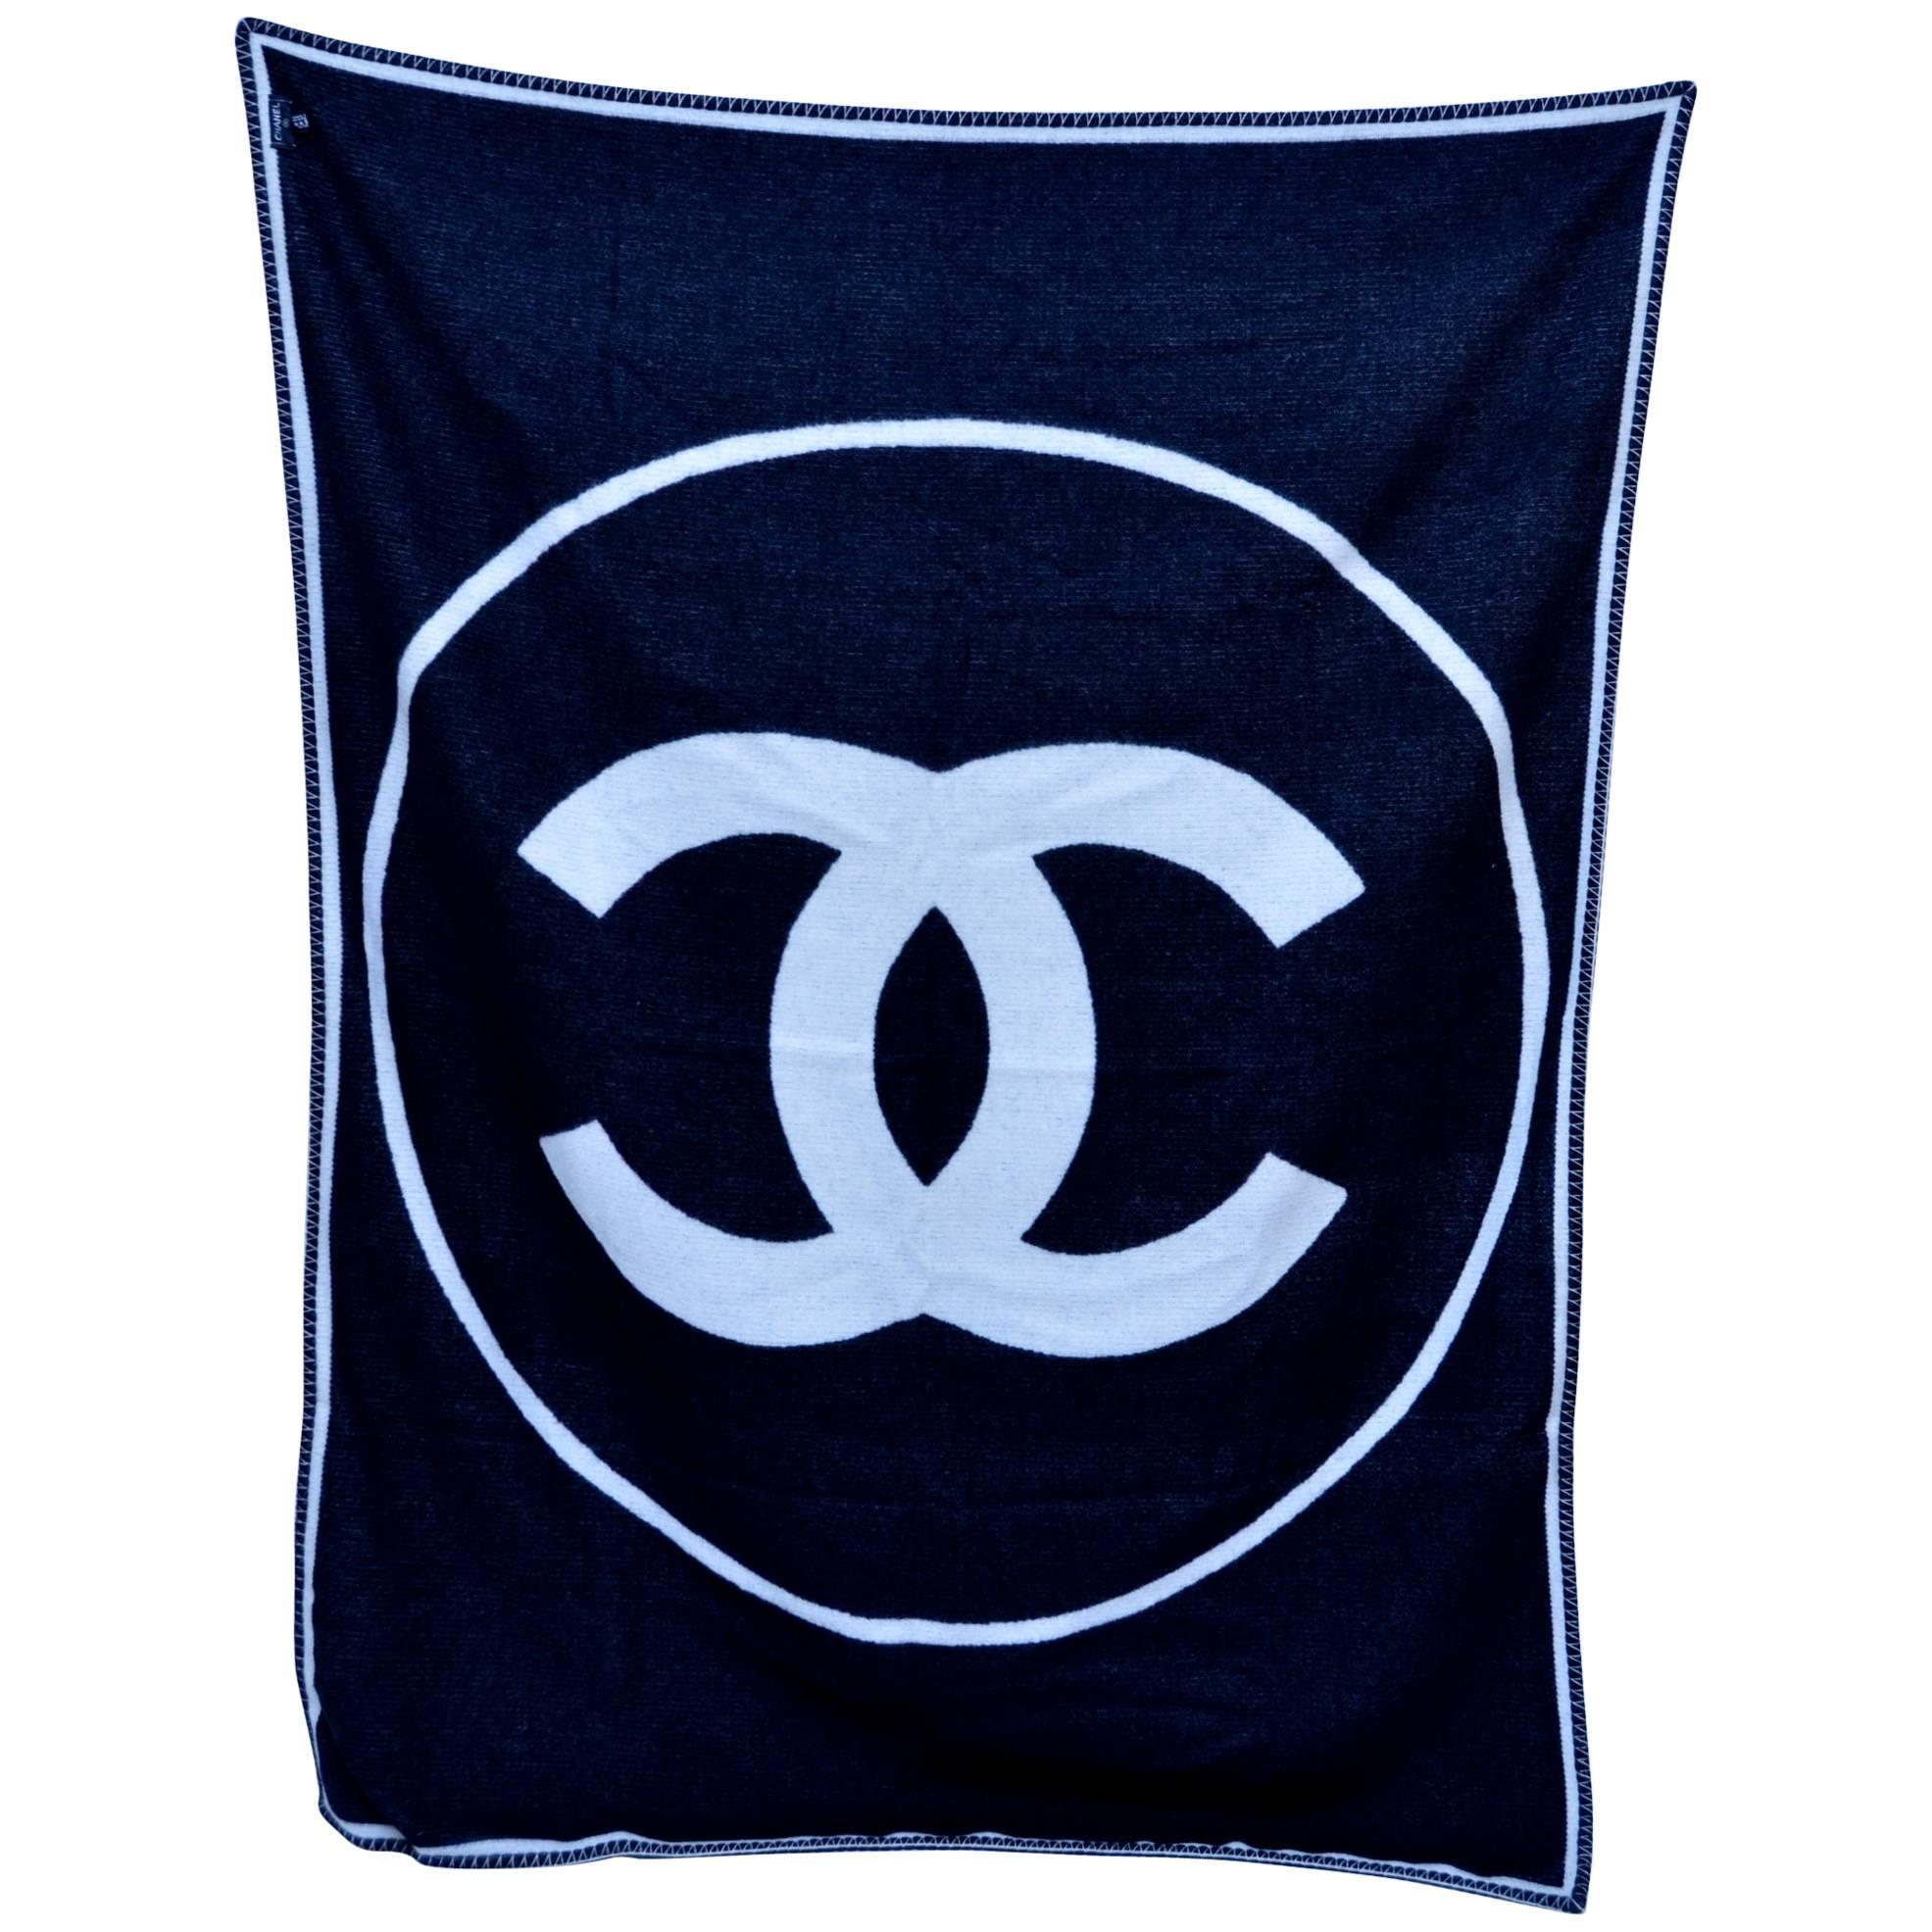 CHANEL Black & Off White Large CC Logo Travel Home Decor Throw Blanket NEW